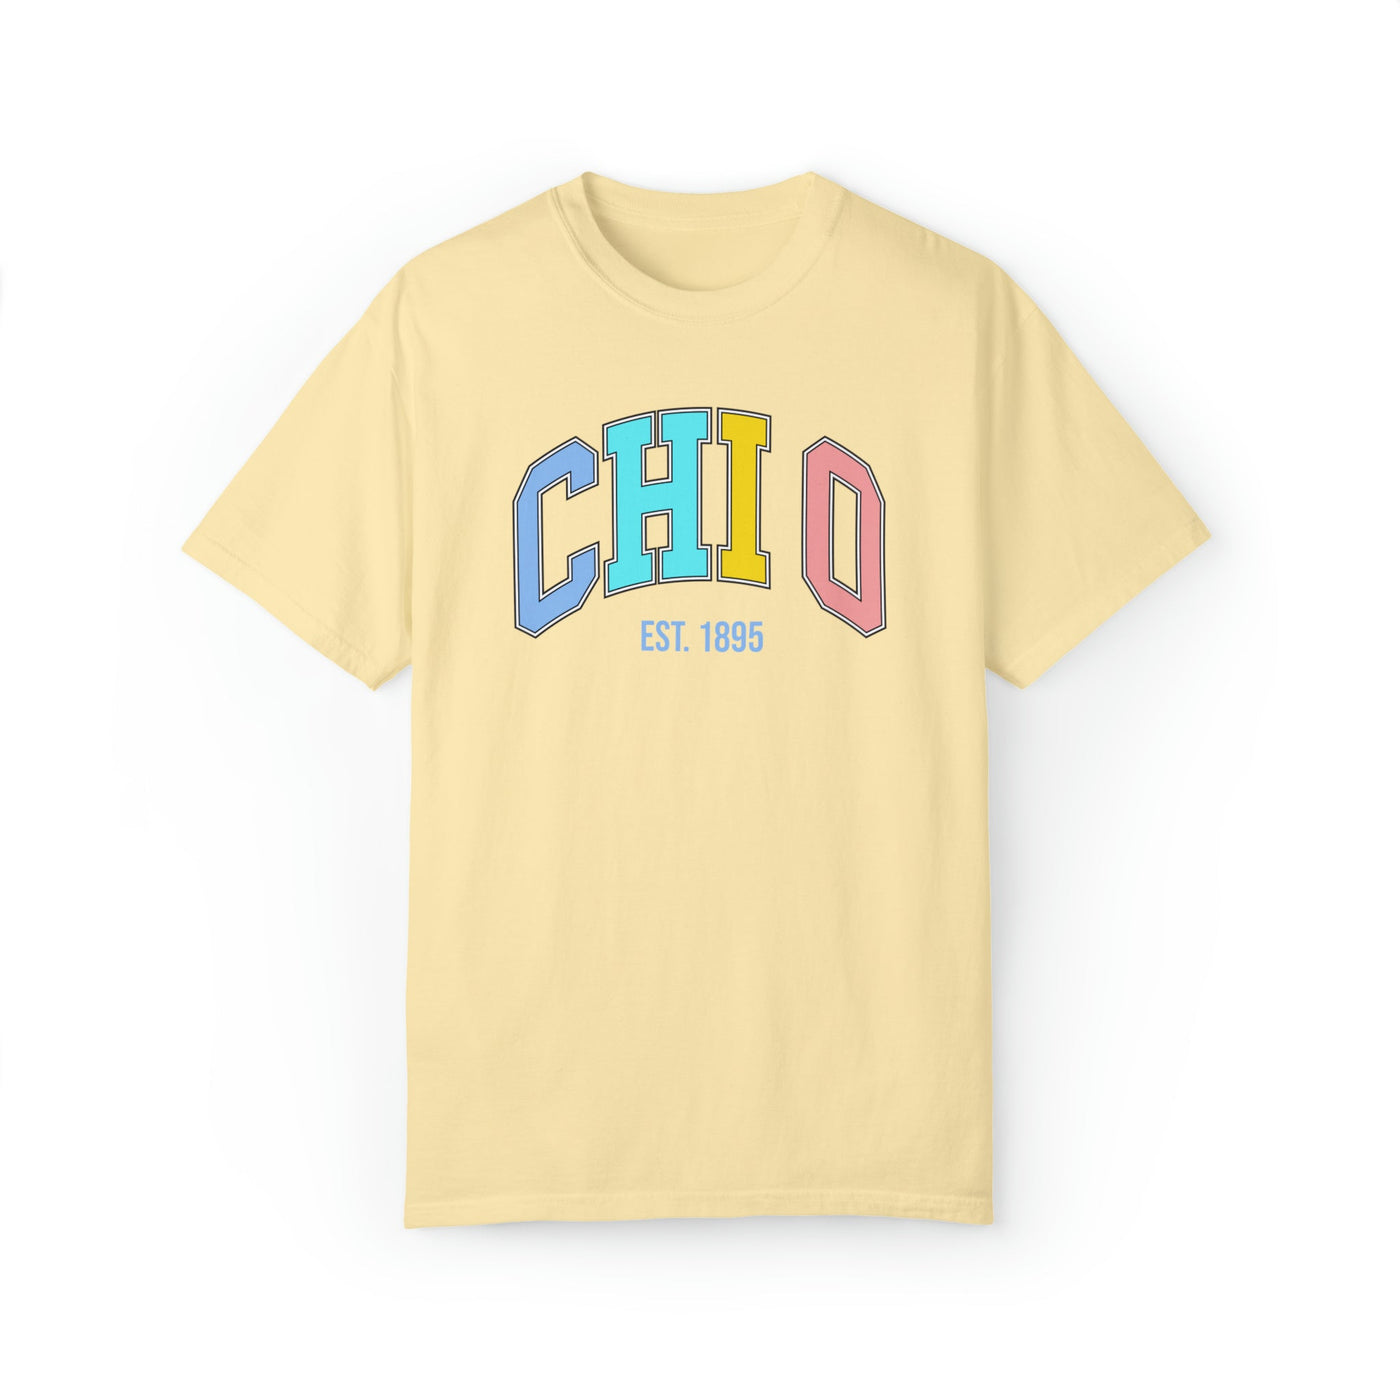 Chi Omega Pastel Varsity Sorority T-shirt